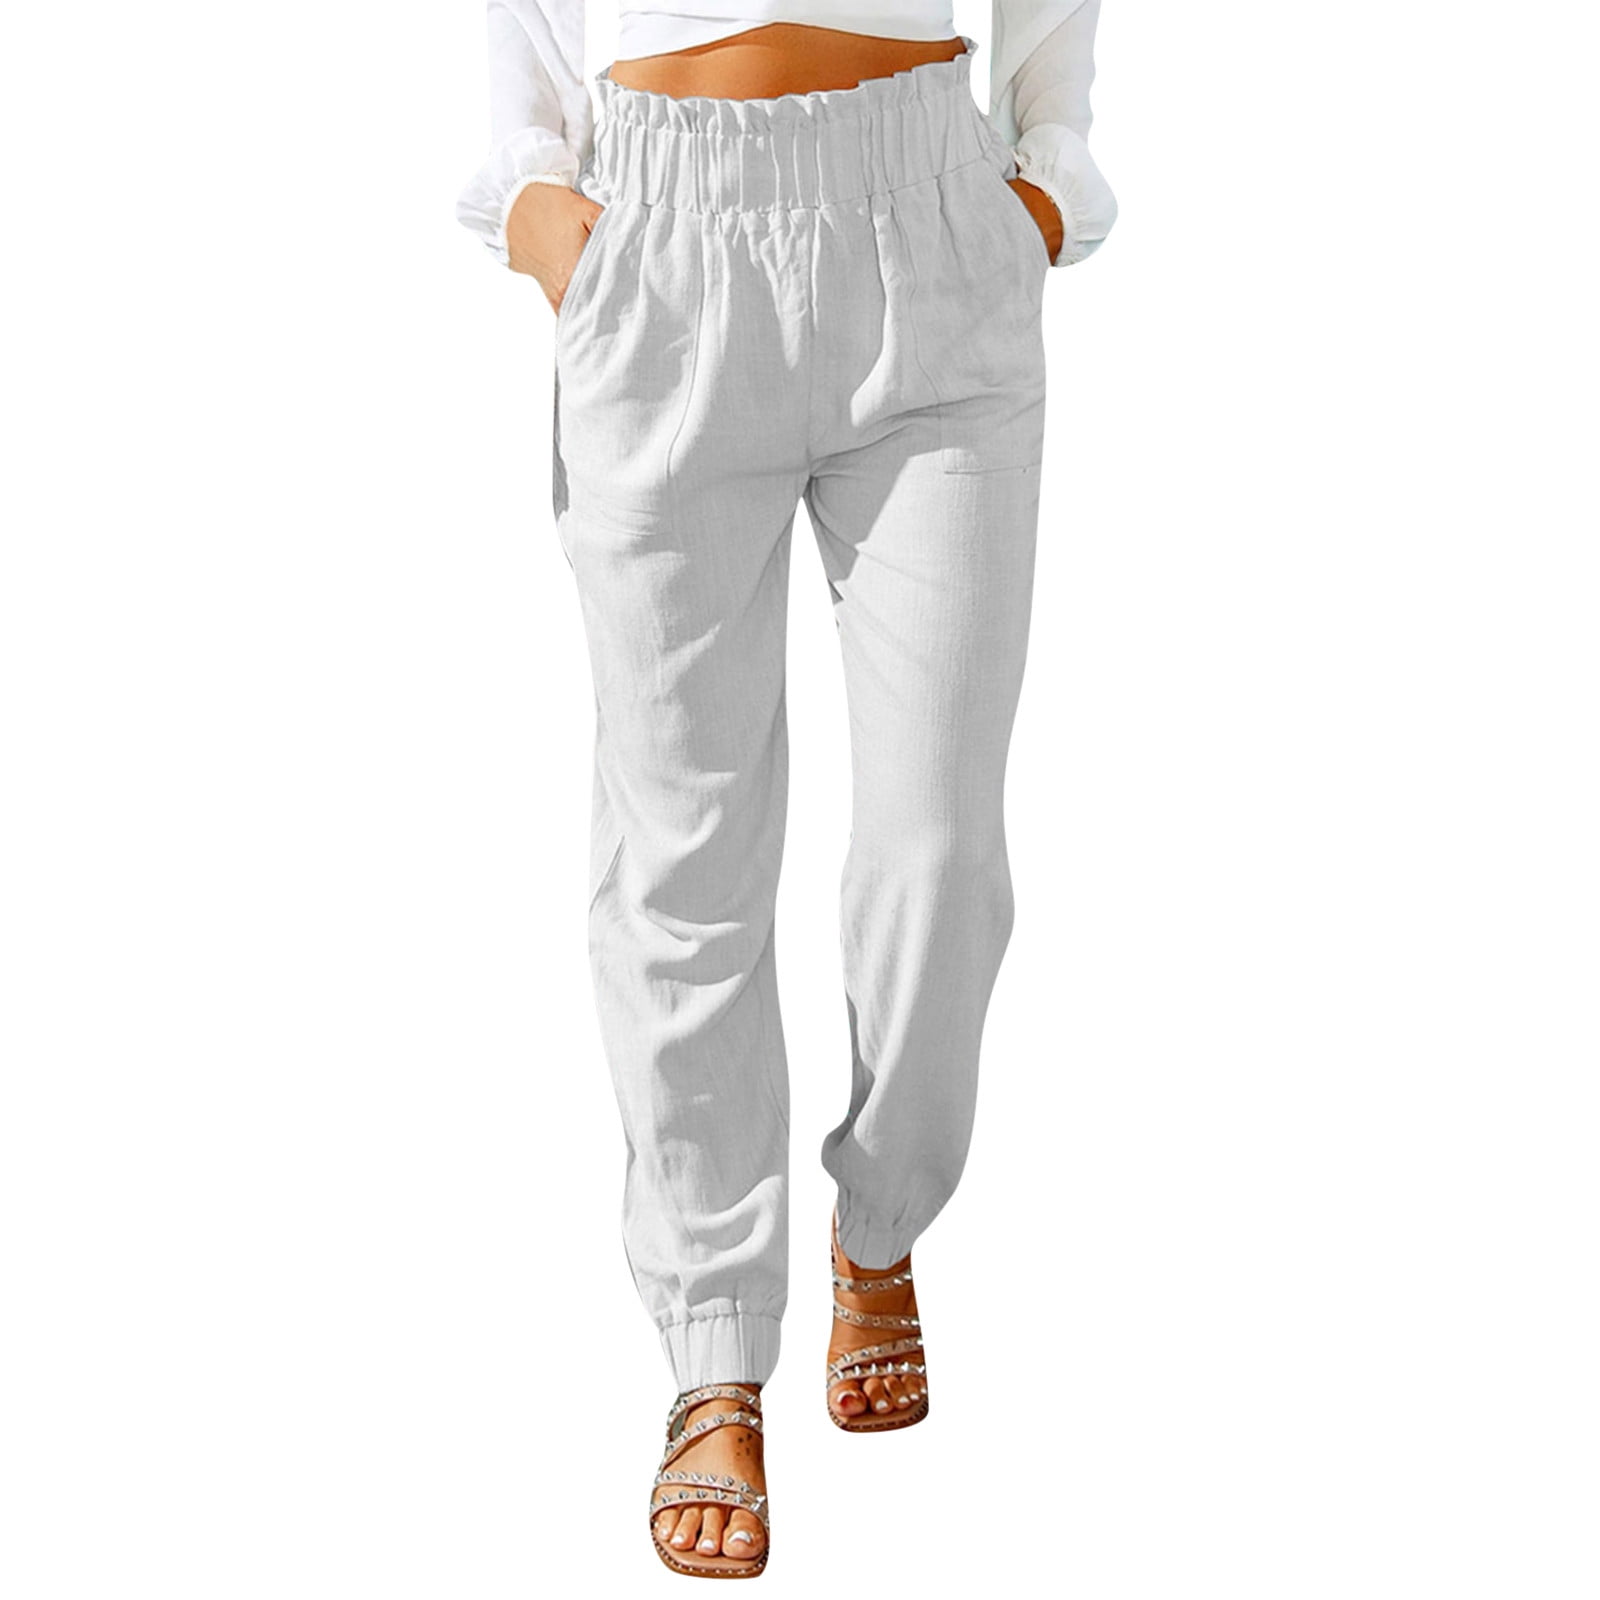 Outfmvch Cargo Pants Women Women'S Pants White Linen Pants For Women ...